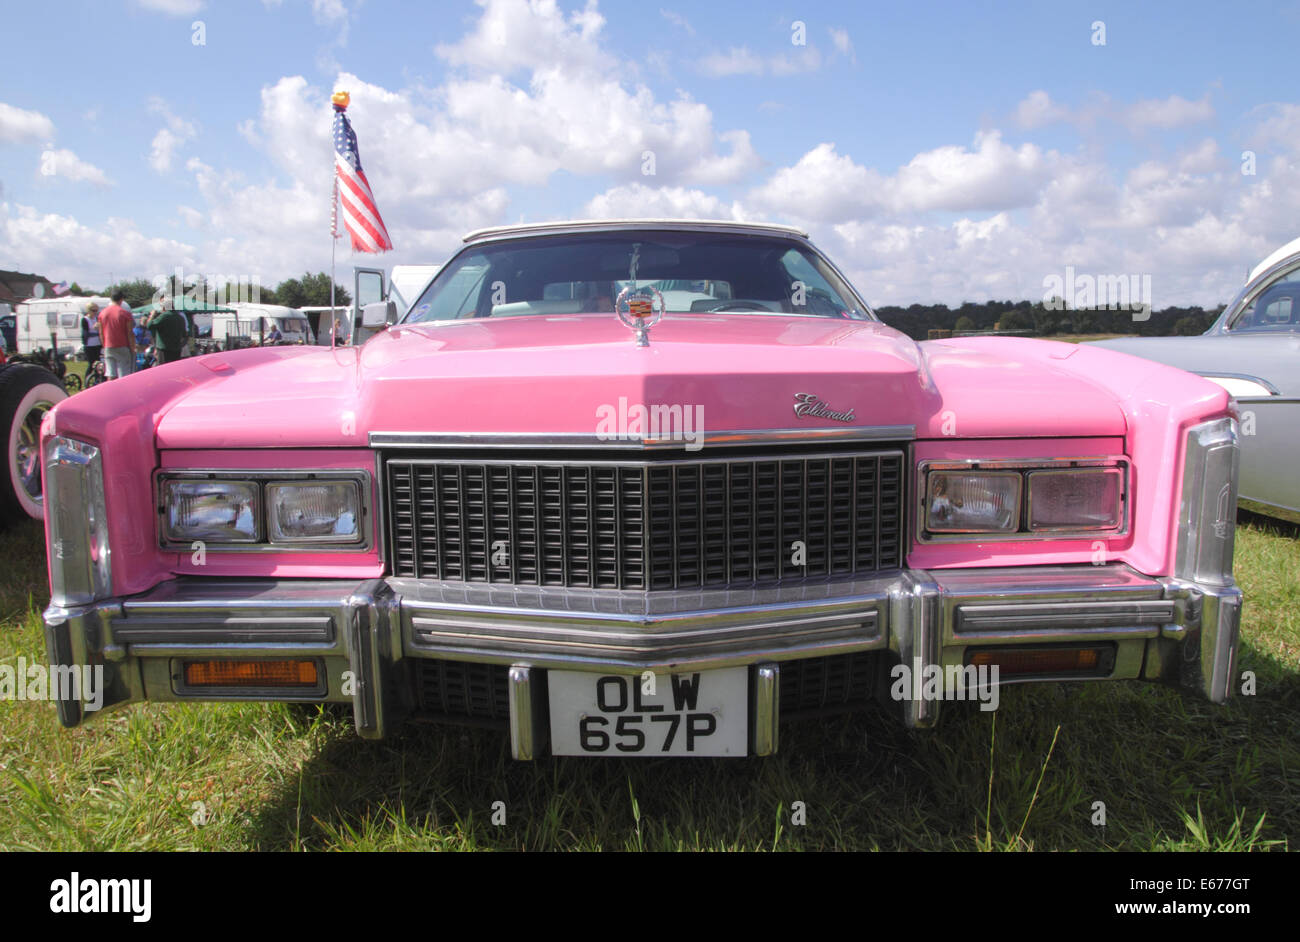 Cadillac eldorado classic american car Banque de photographies et